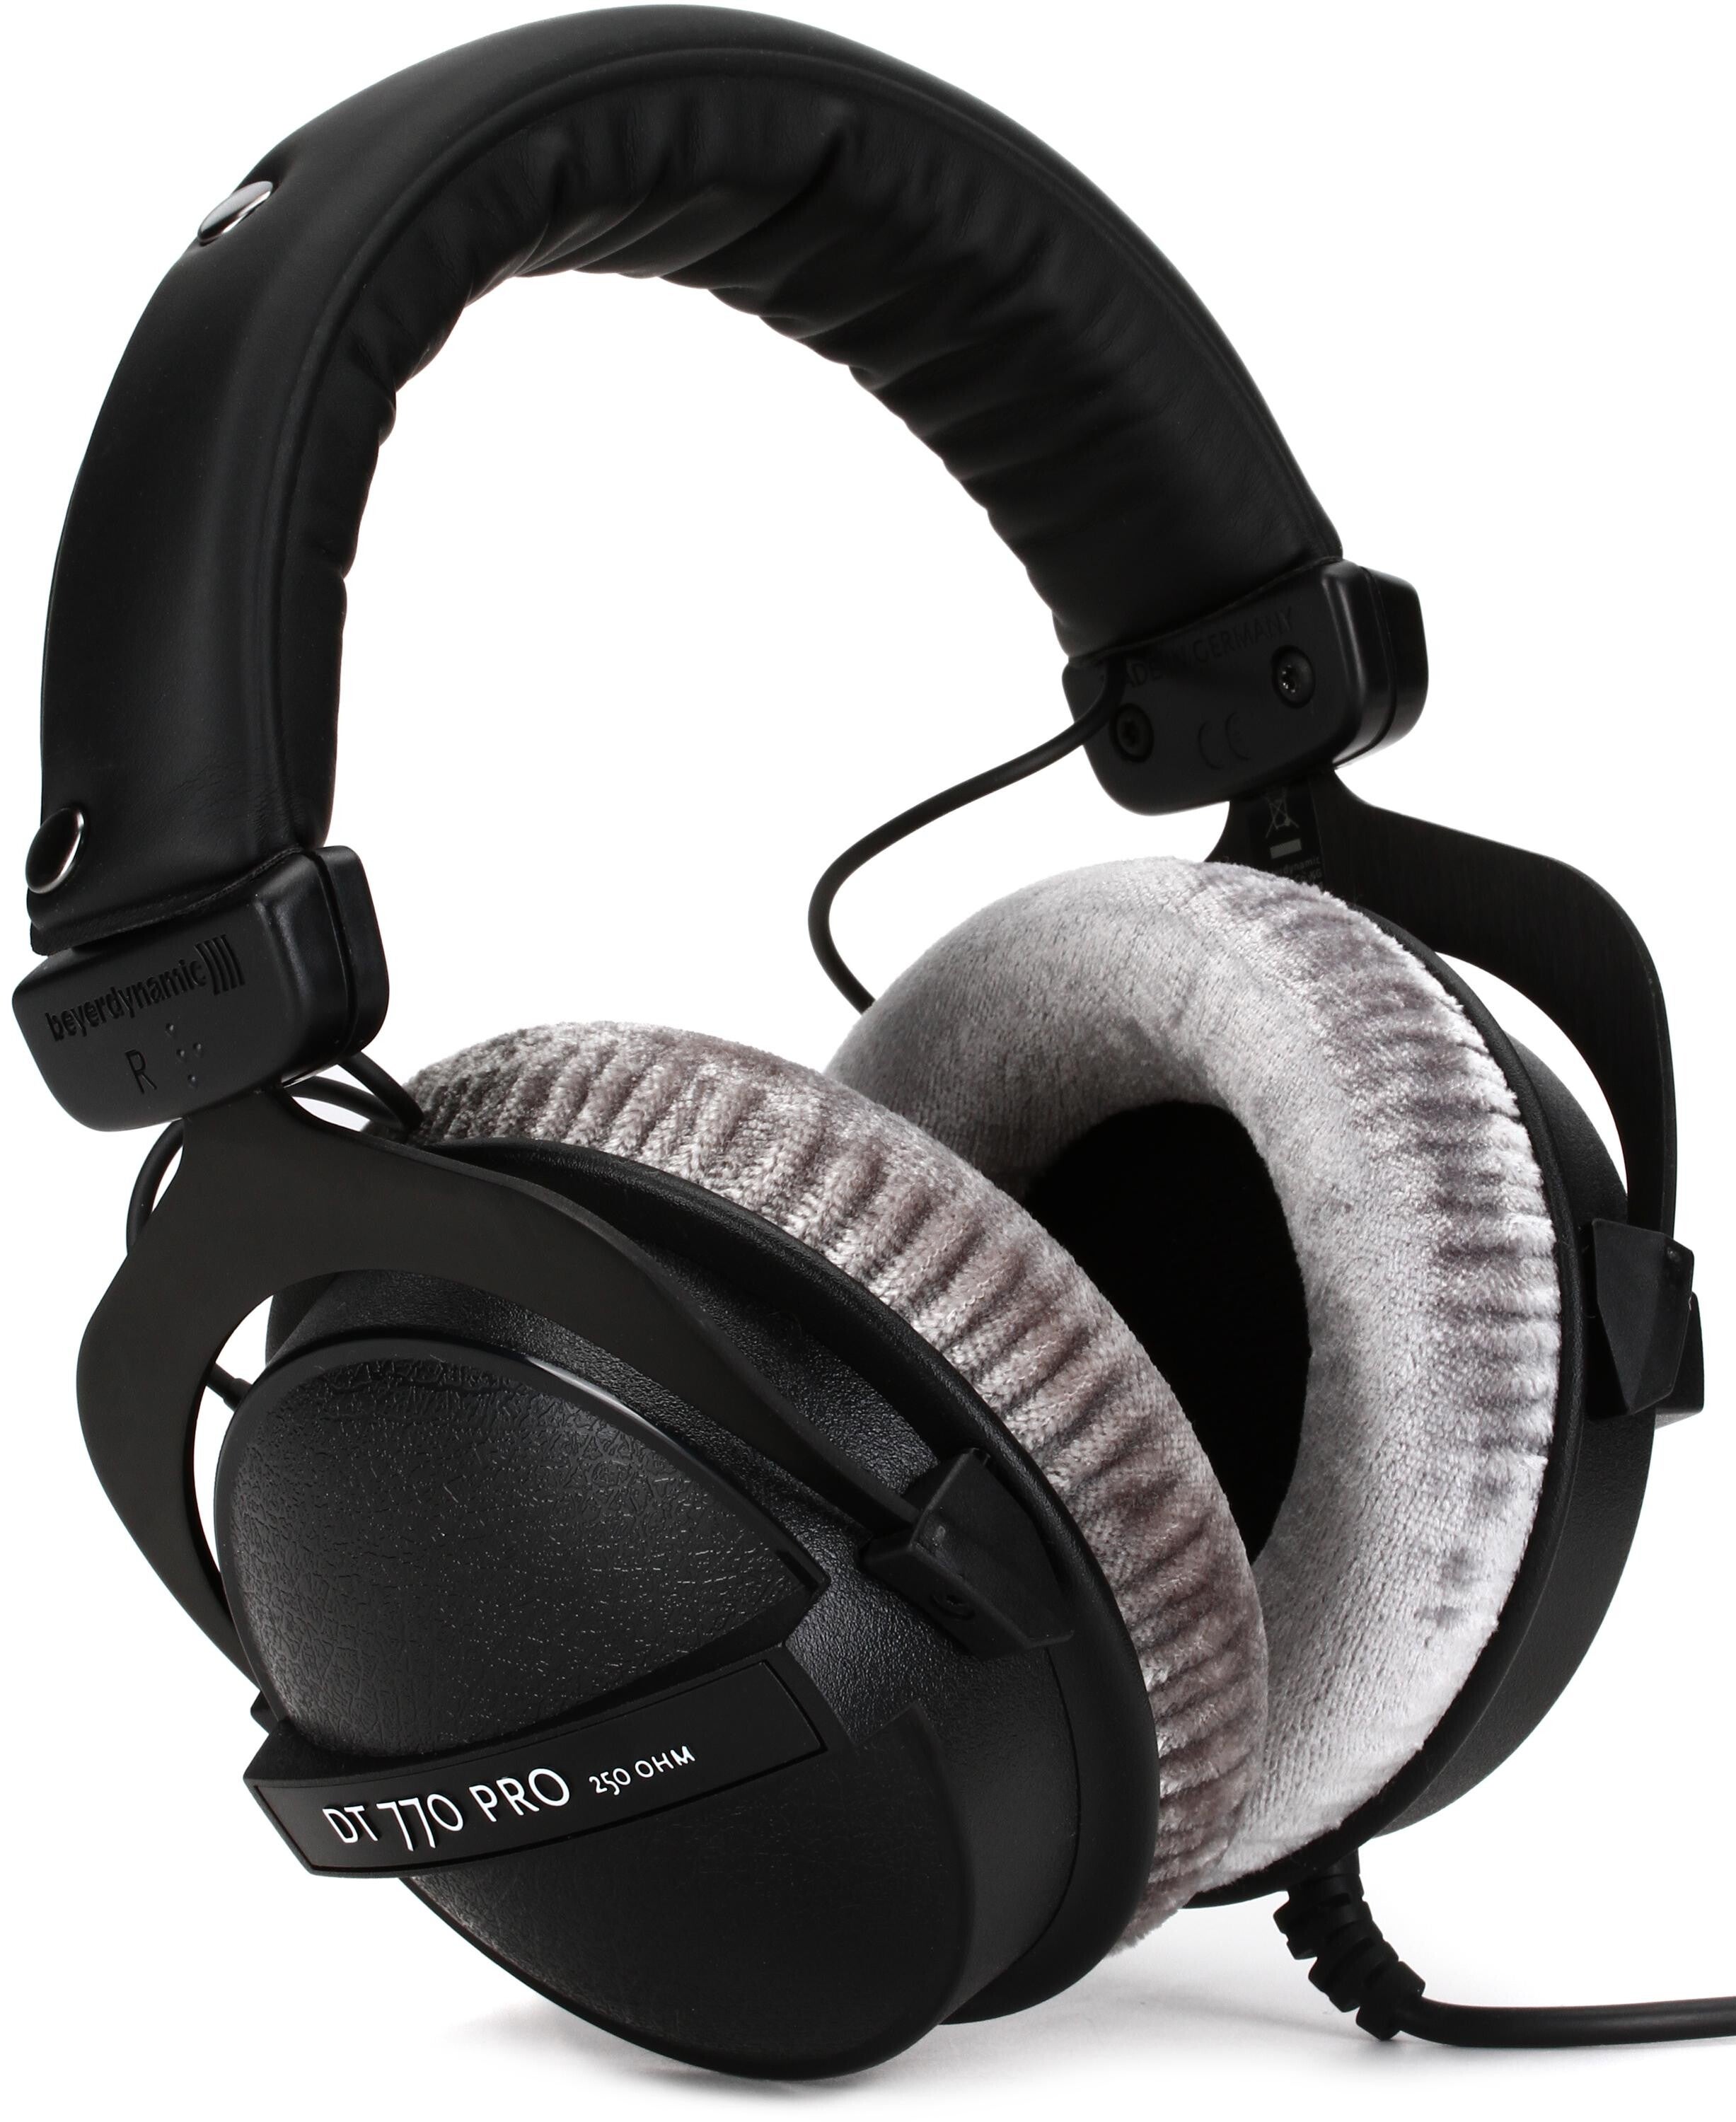 Bundled Item: Beyerdynamic DT 770 Pro 250 ohm Closed-back Studio Mixing Headphones